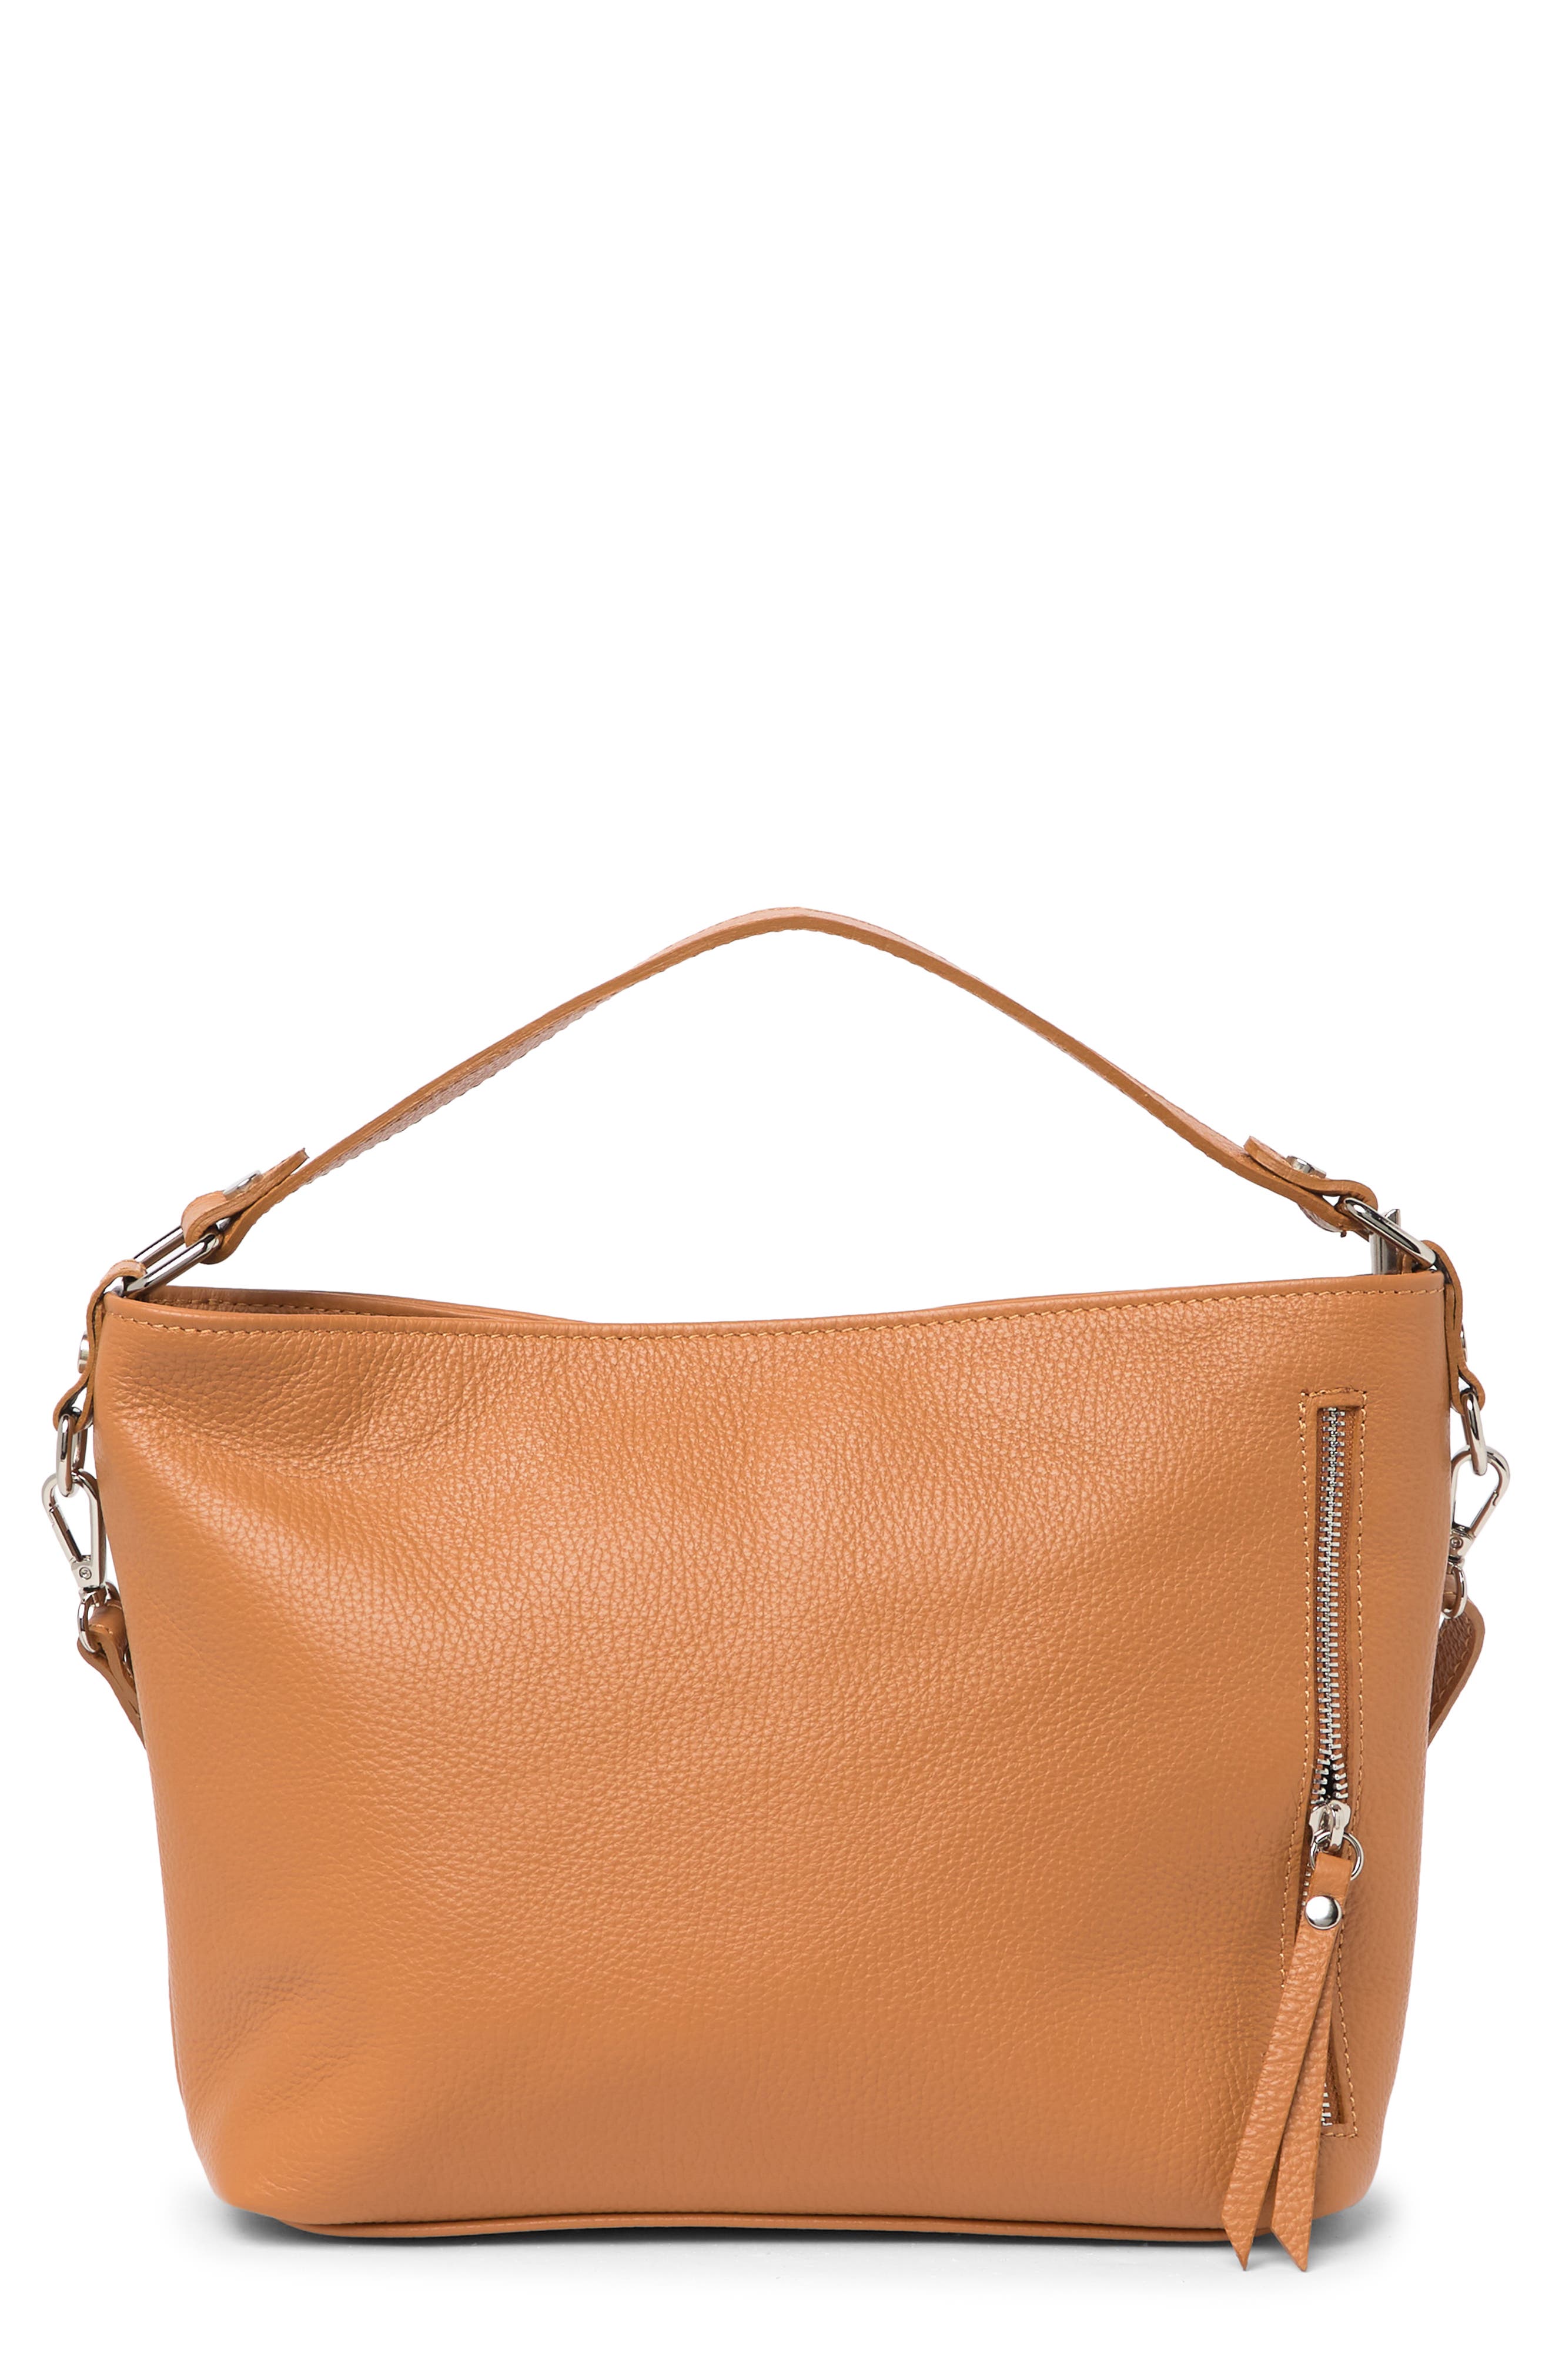 Giulia Massari Leather Shoulder Bag In Bright Orange